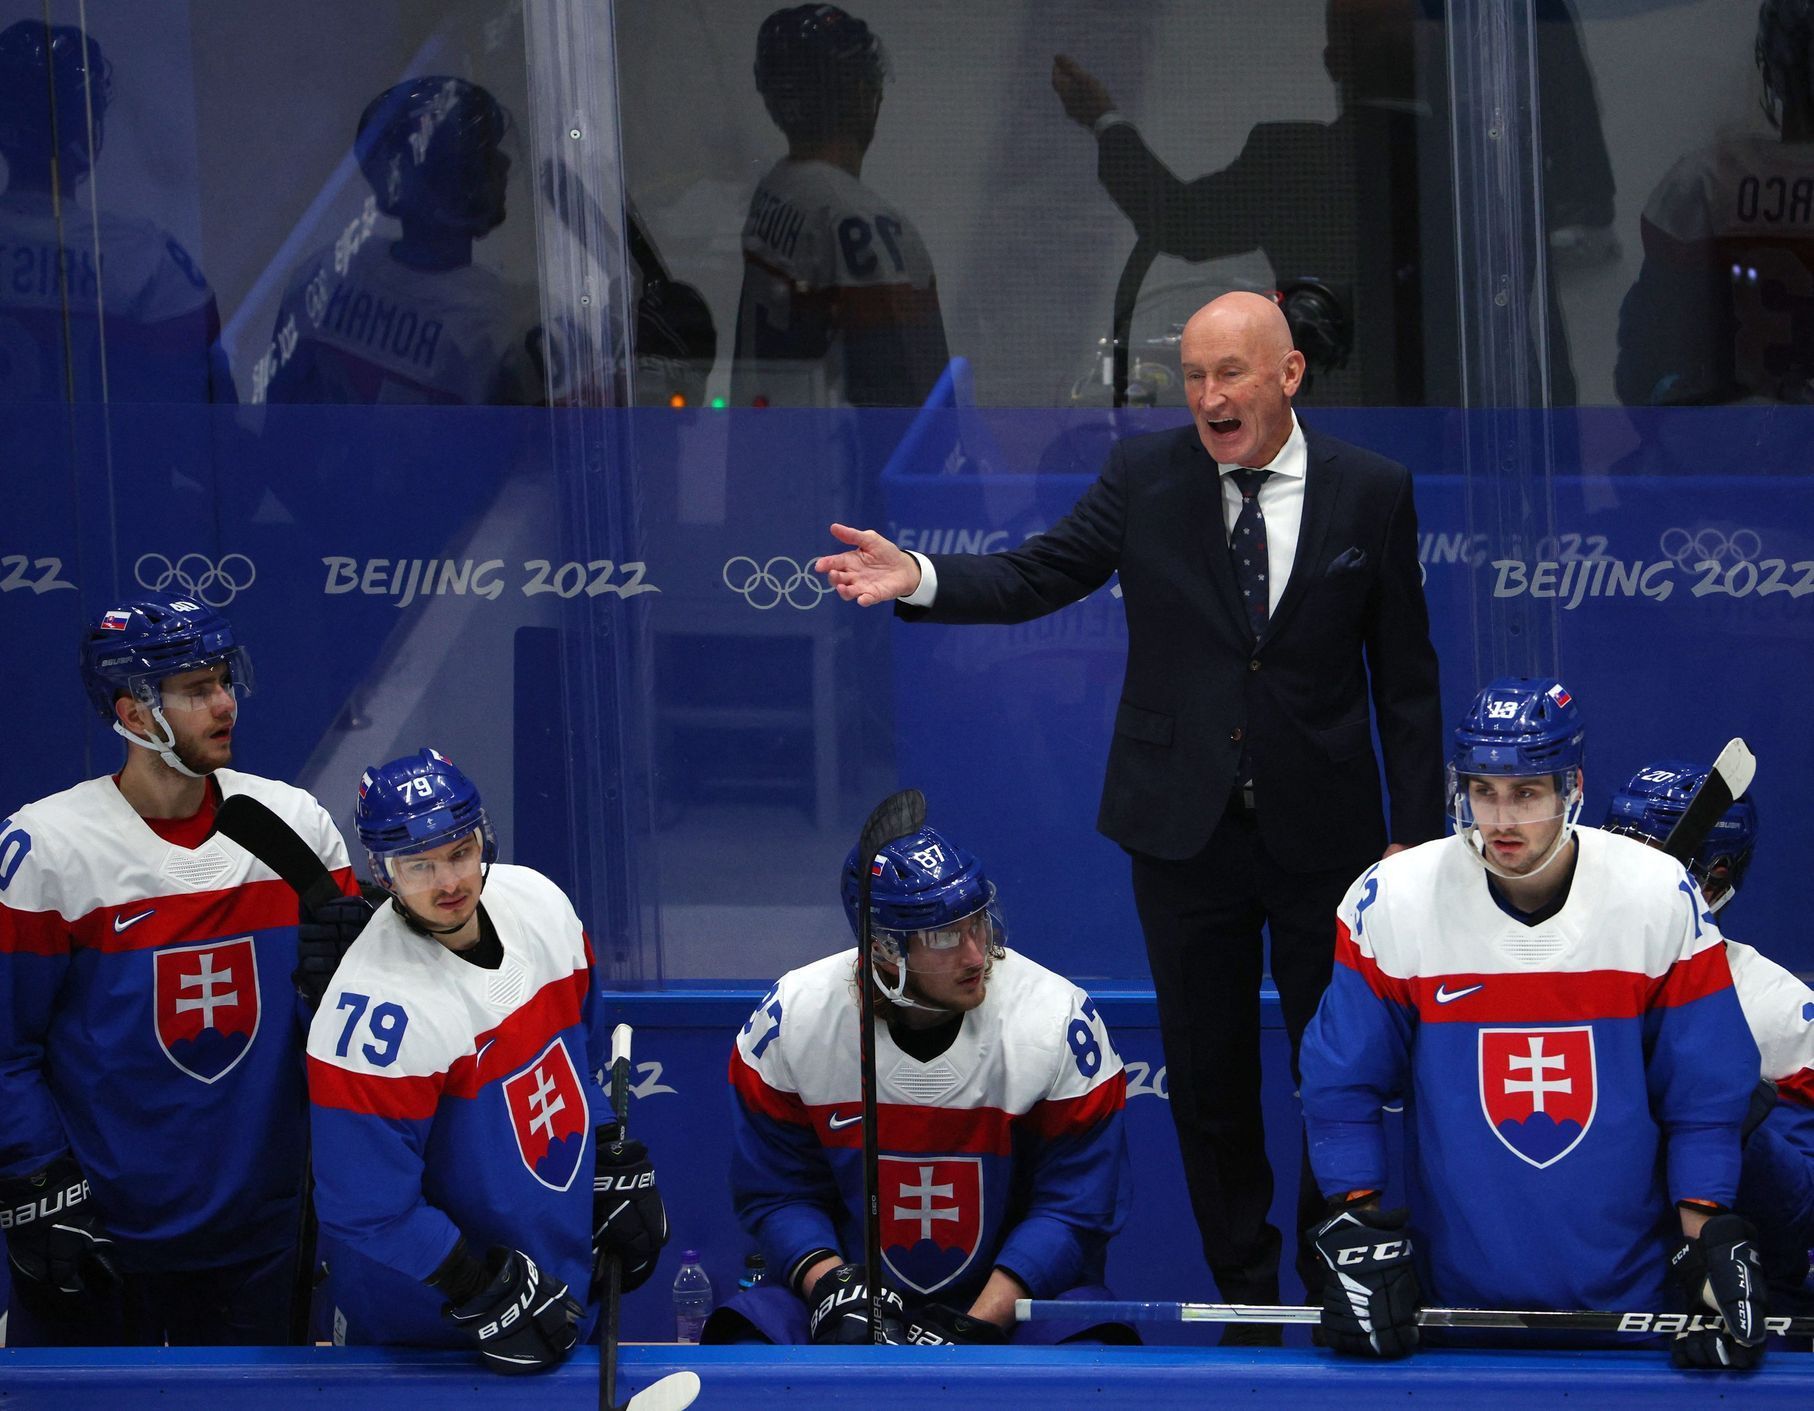 Ice Hockey - Men's Play-offs Qualifications - Slovakia v Germany